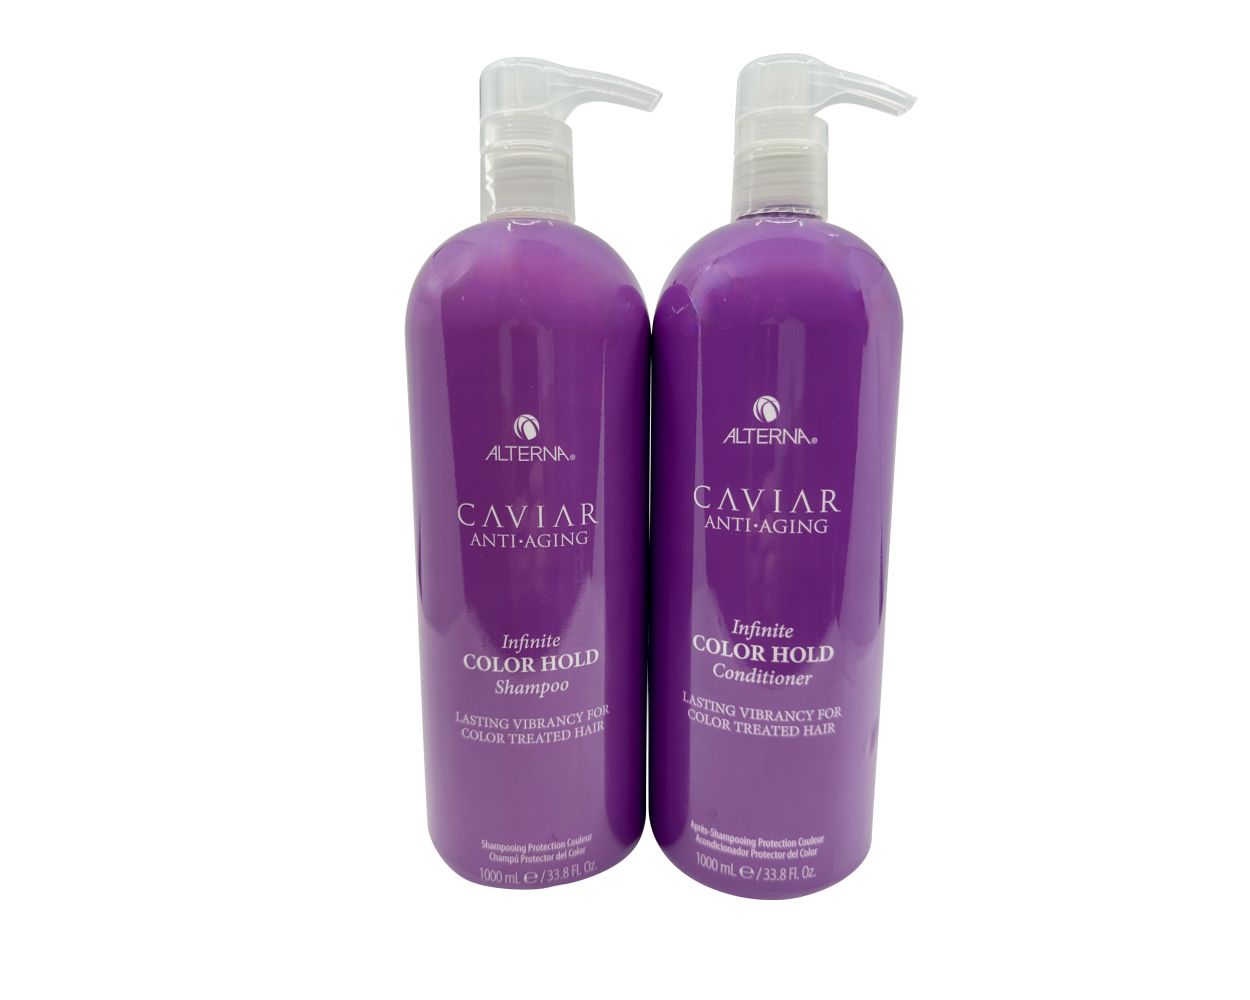 Alterna Caviar Anti Aging Infinite Color Hold Shampoo & Conditioner Color Treated | Shampoo Beautyvice.com